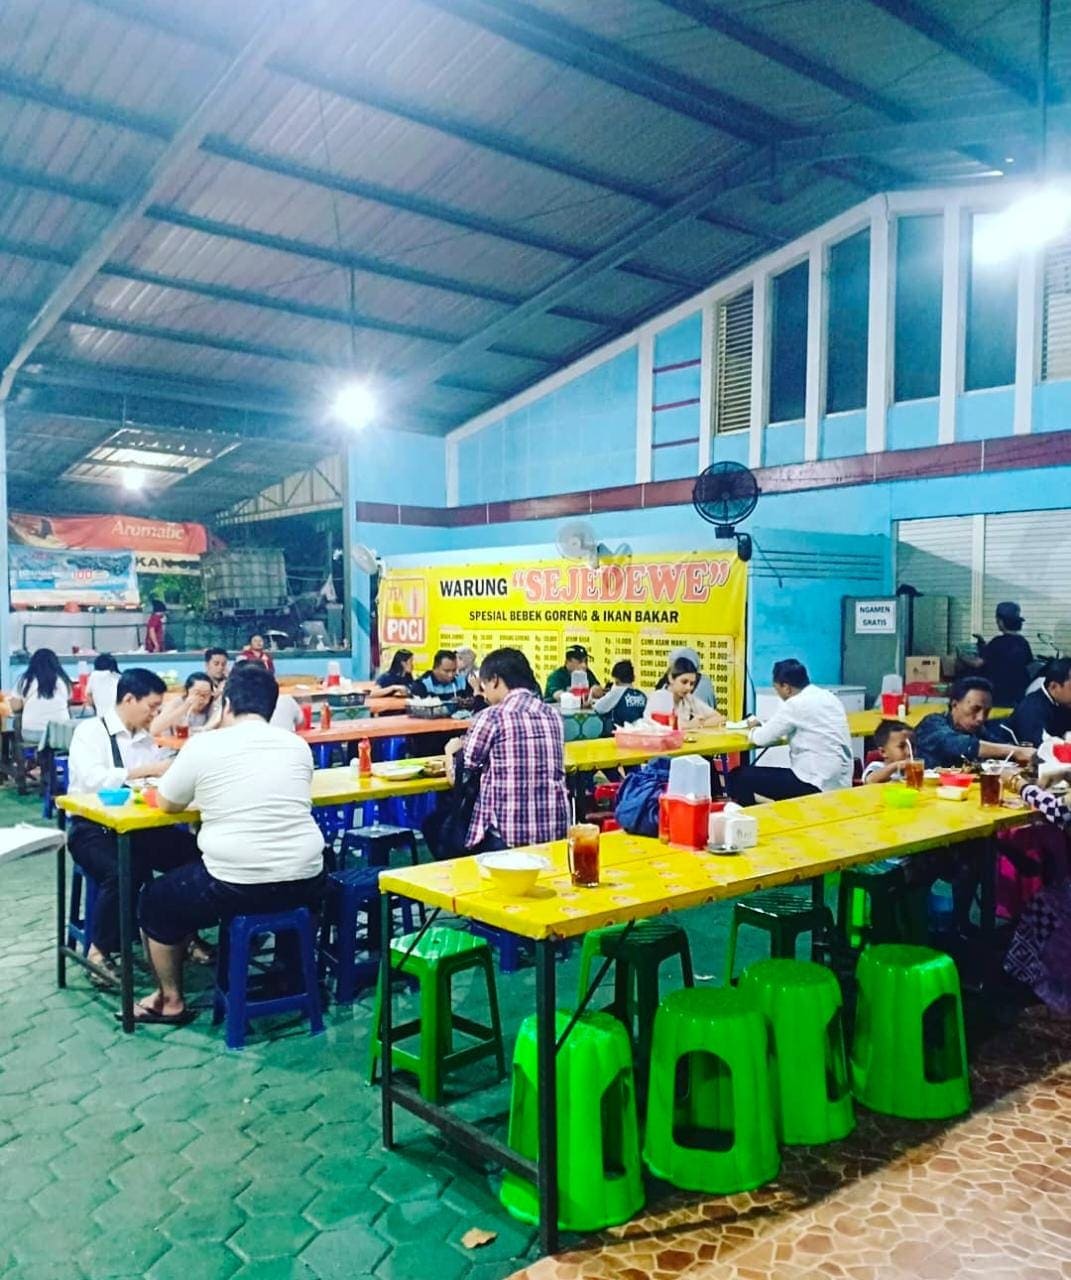 Wisata kuliner malam Surabaya. (Foto: IG @warungsejedewe/Tugu Jatim)